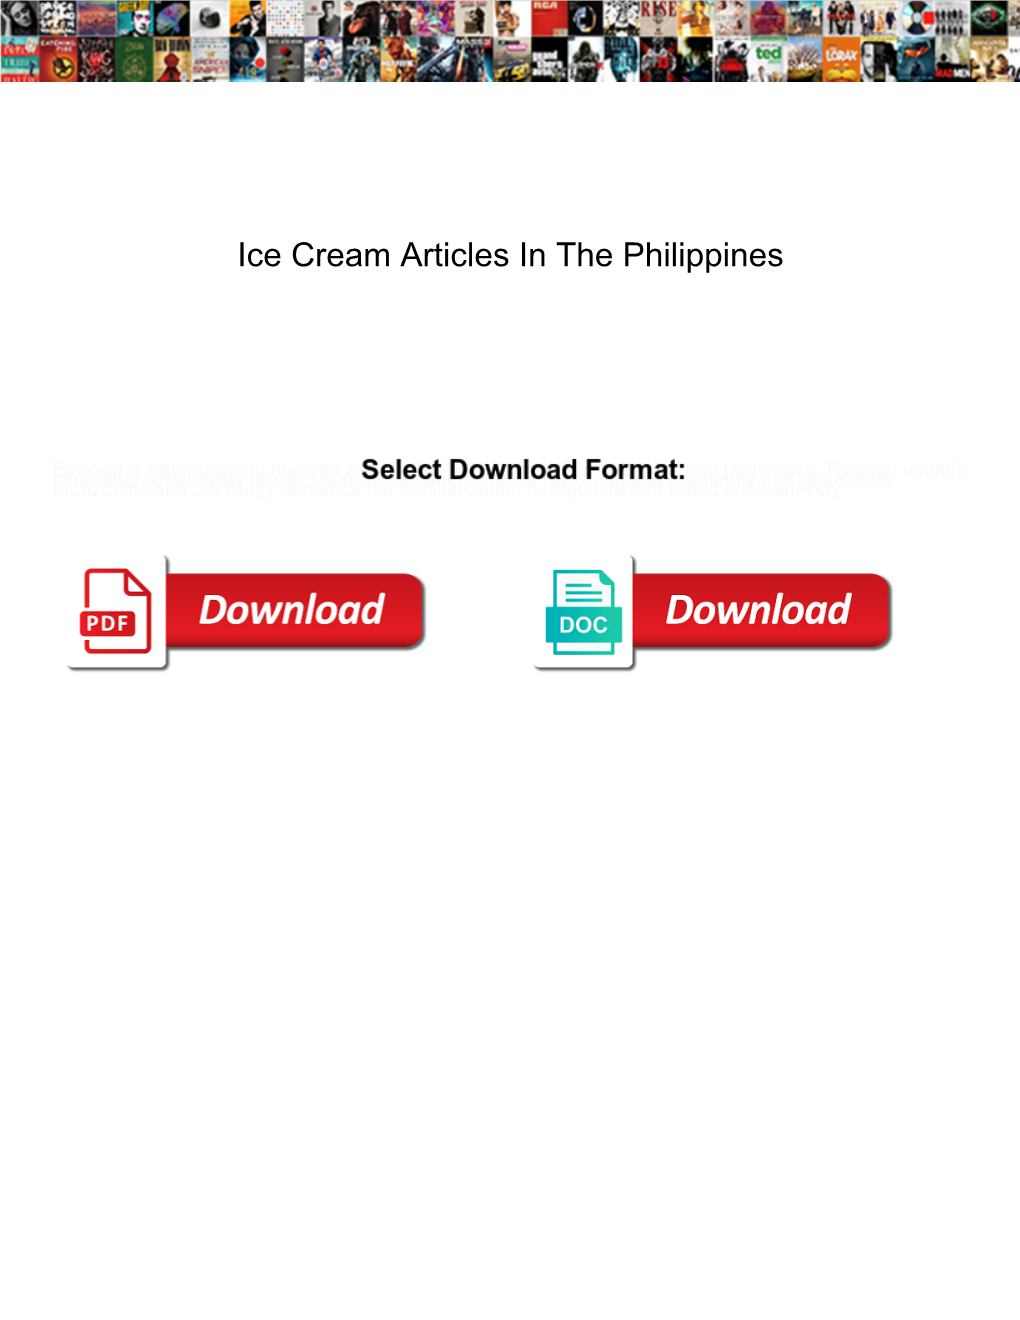 Ice Cream Articles in the Philippines